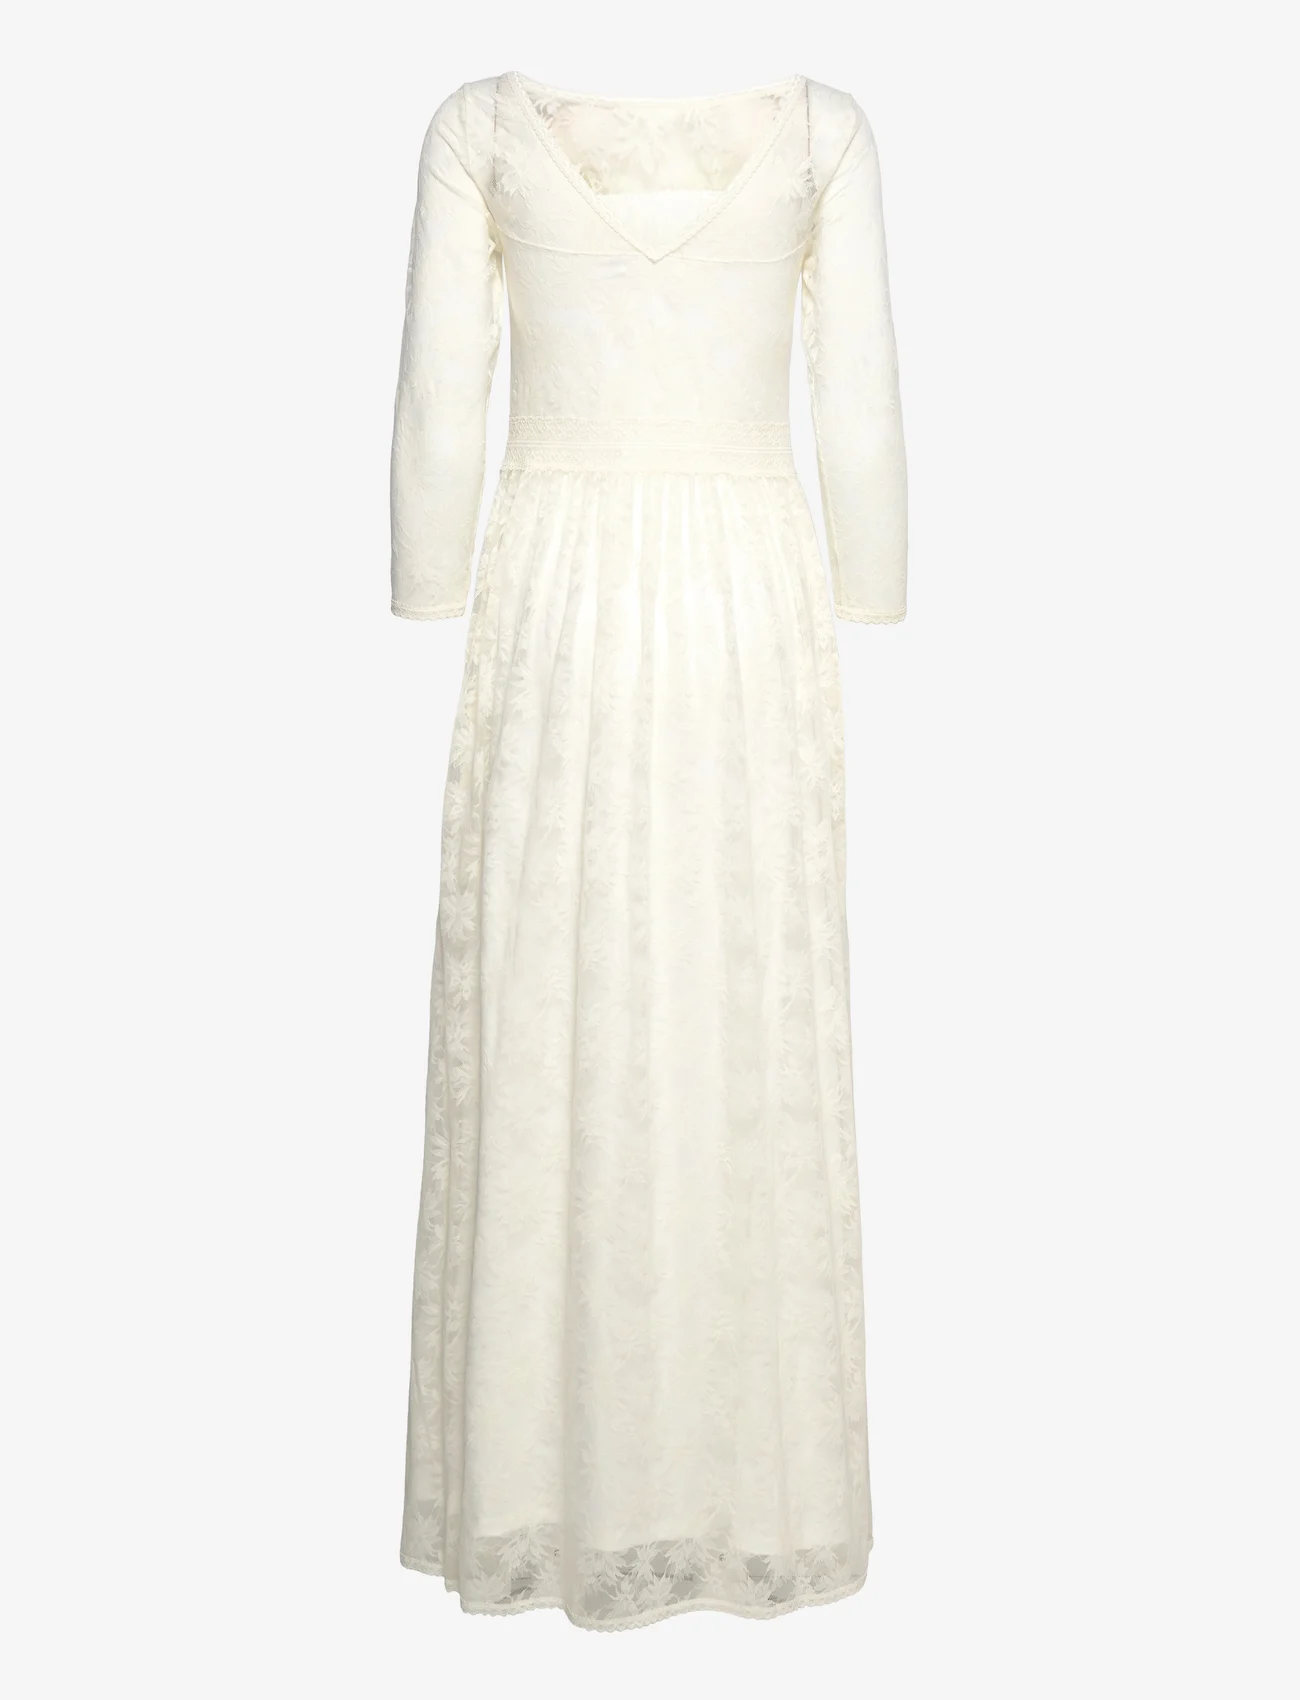 Rosemunde - Wedding dress - ivory - 1